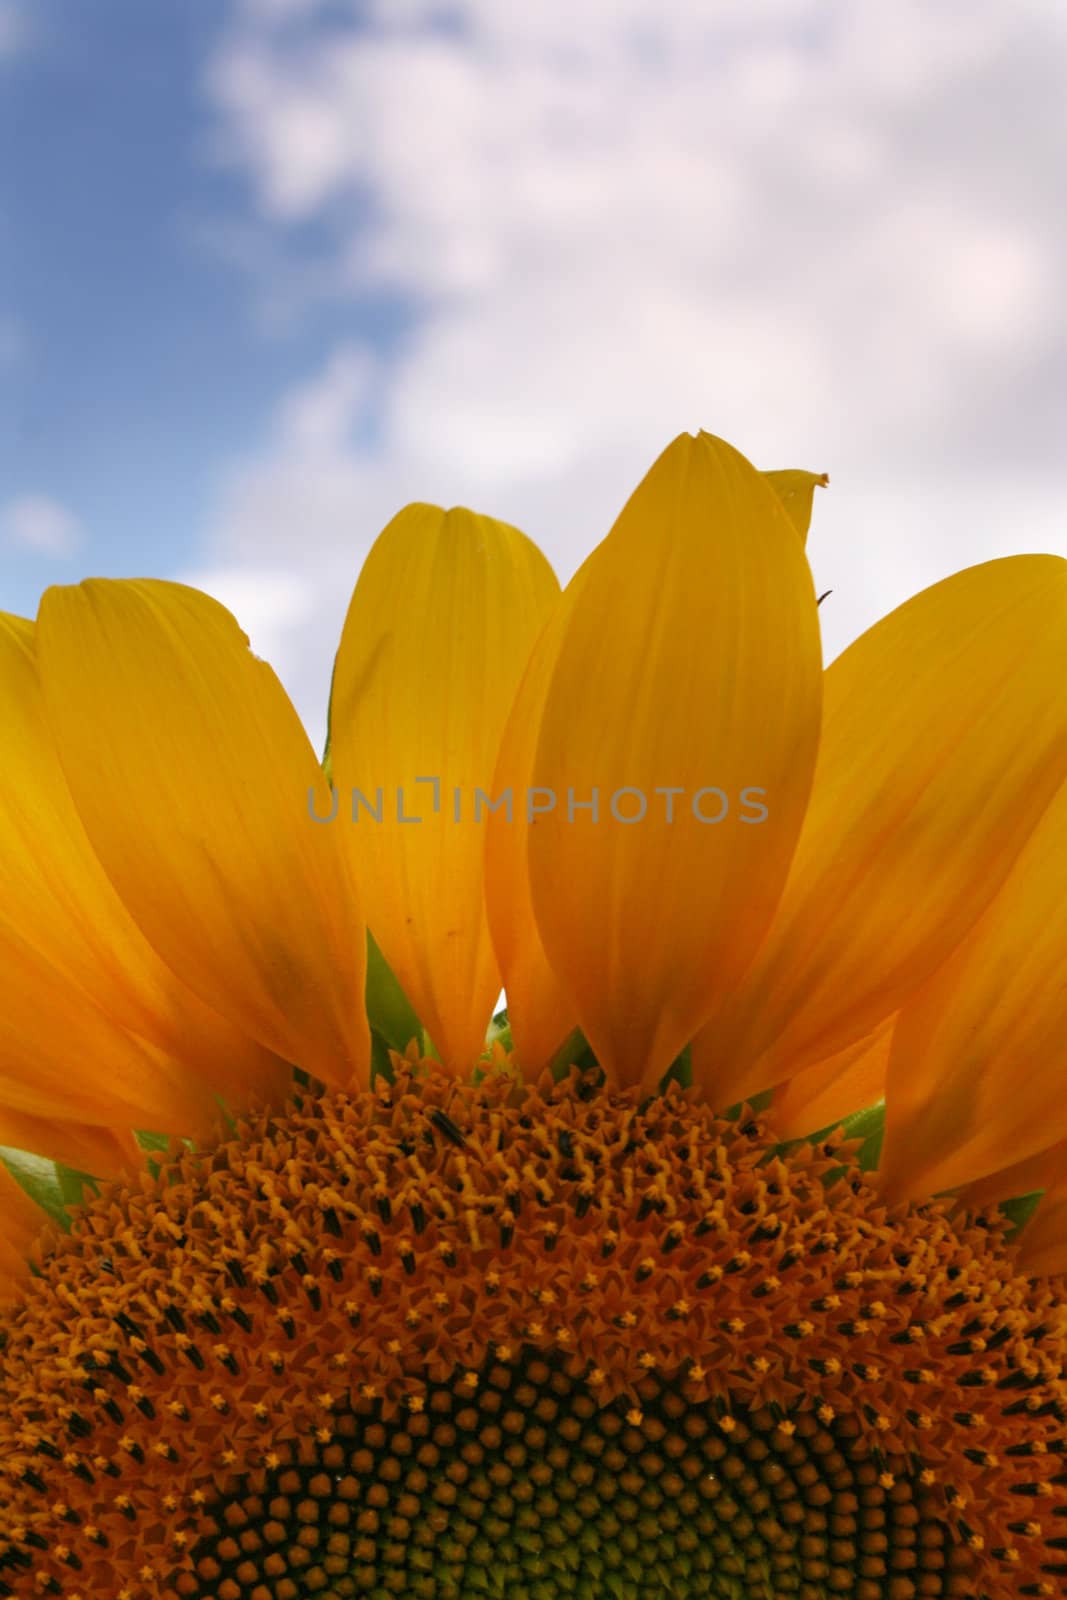 Nice sunflower under blue sky